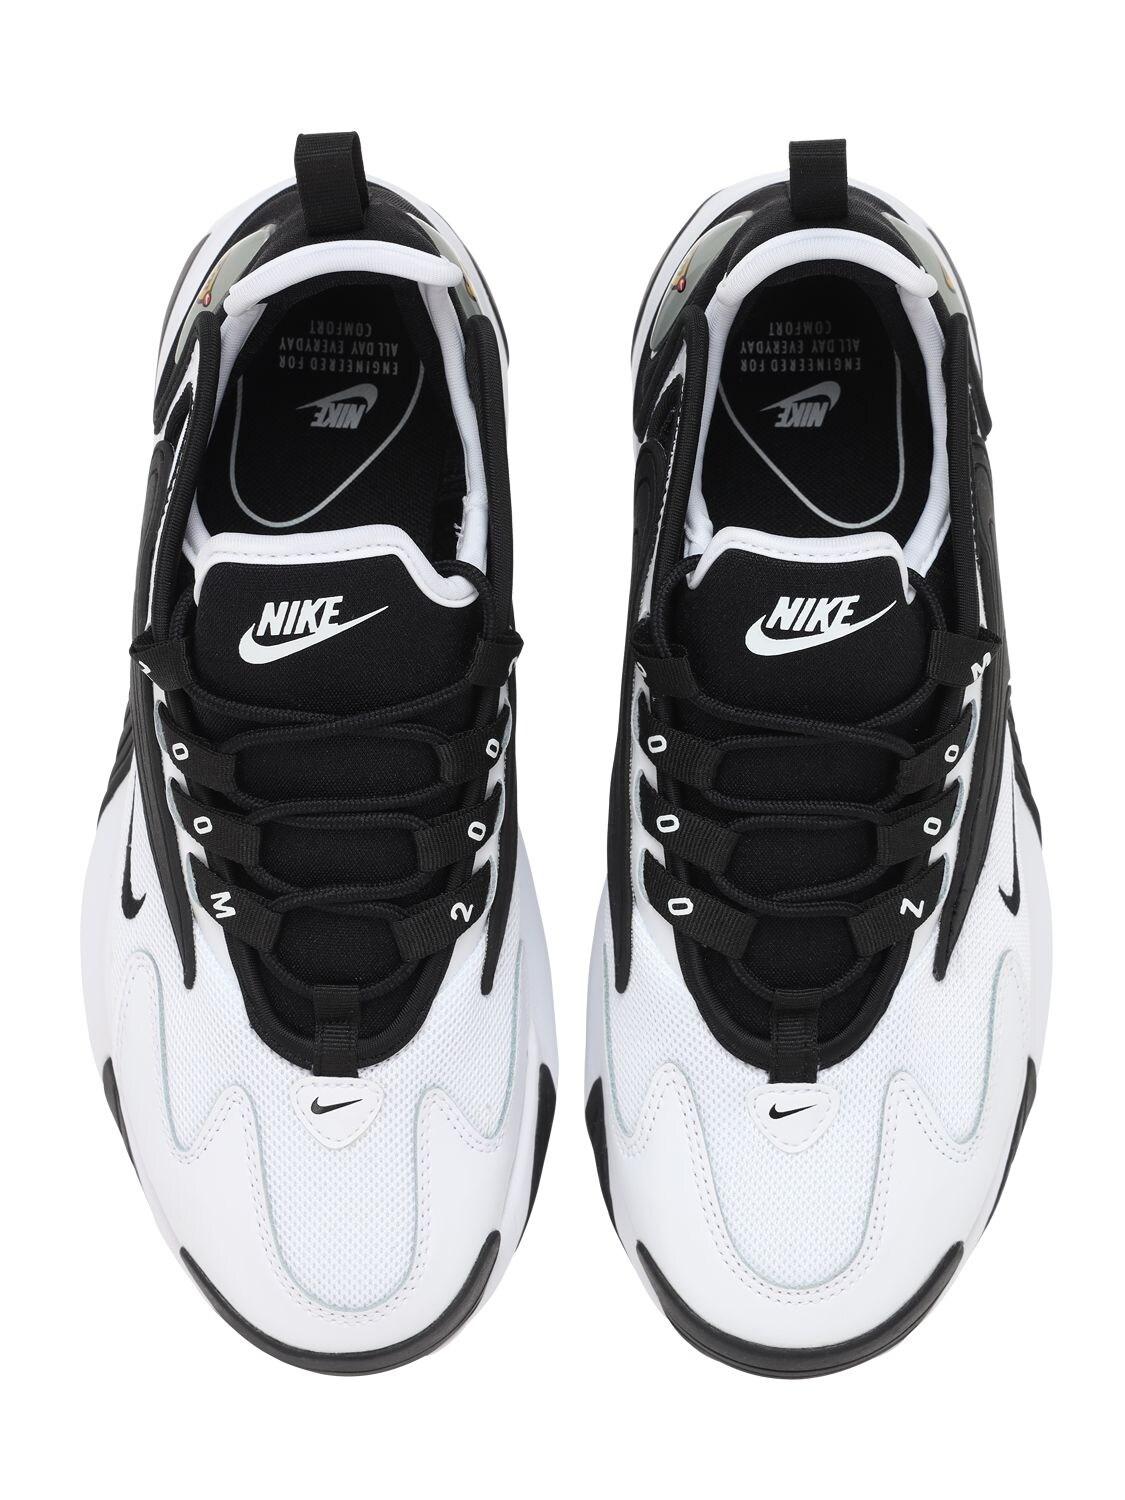 Nike Leather Zoom 2k in White/Black (Black) - Lyst